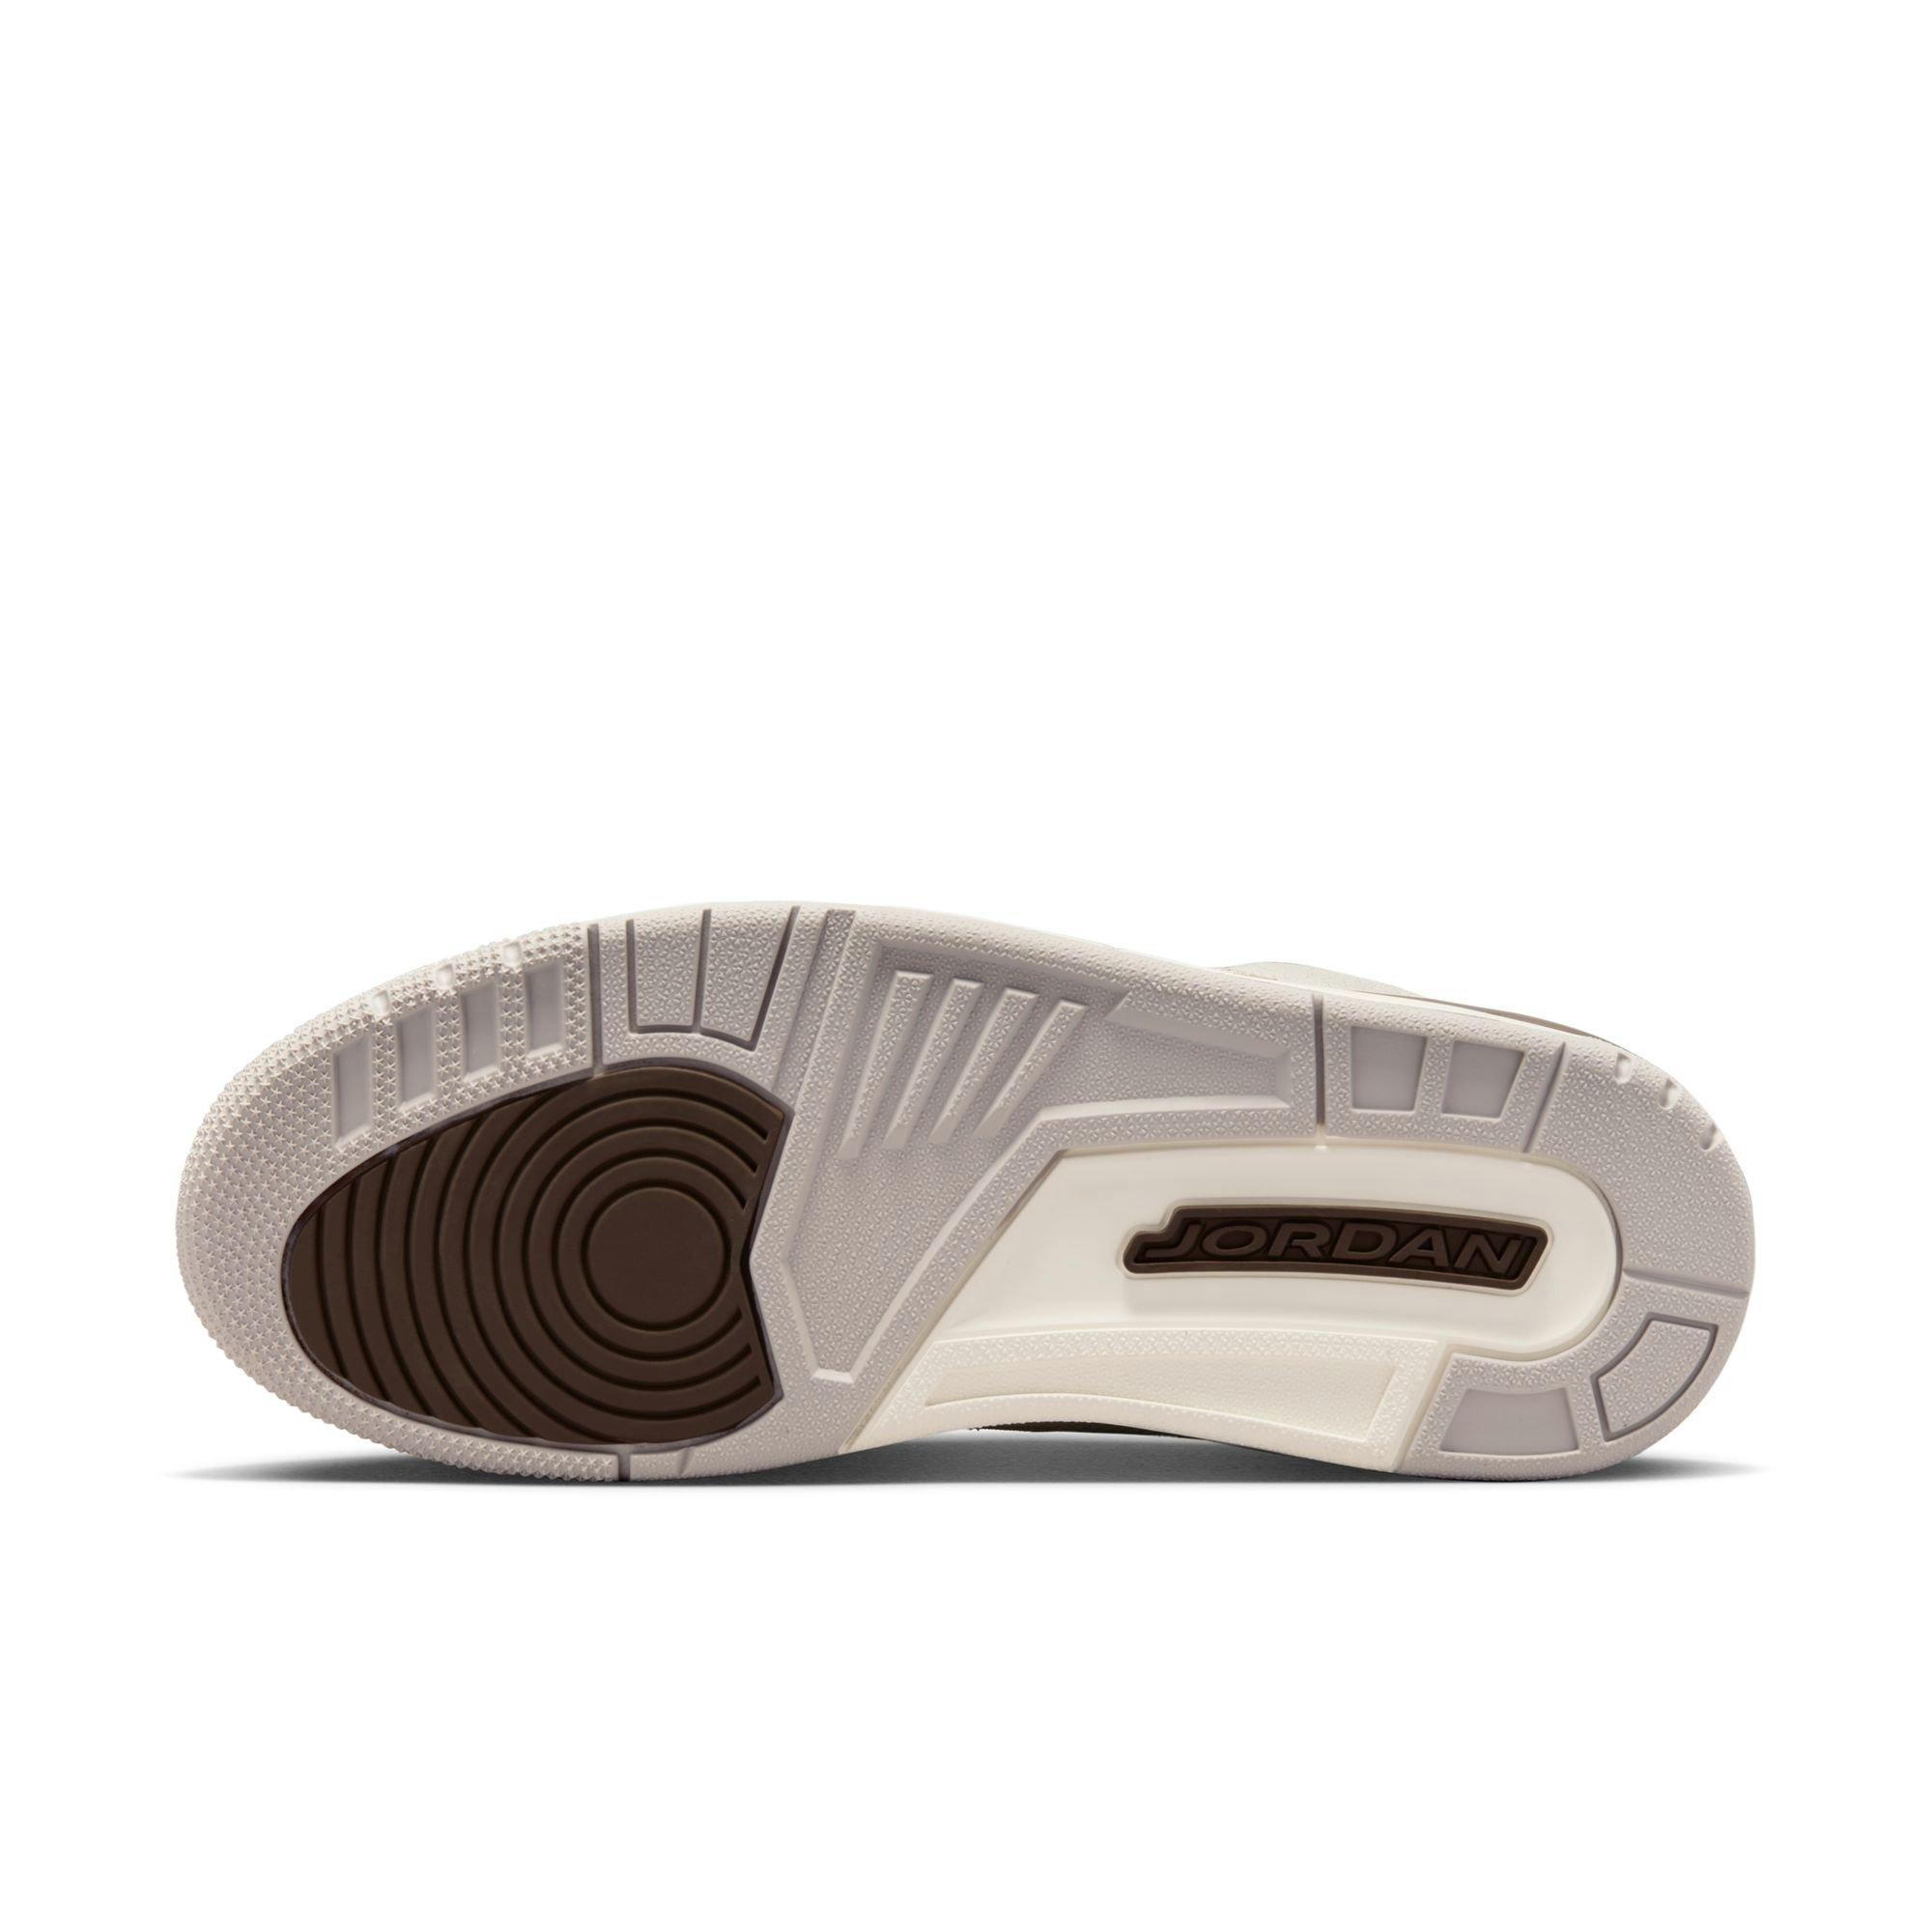 👁️ Sneaker Visionz 👁️ on X: Air Jordan 3 'Palomino' On Feet 🔥   / X